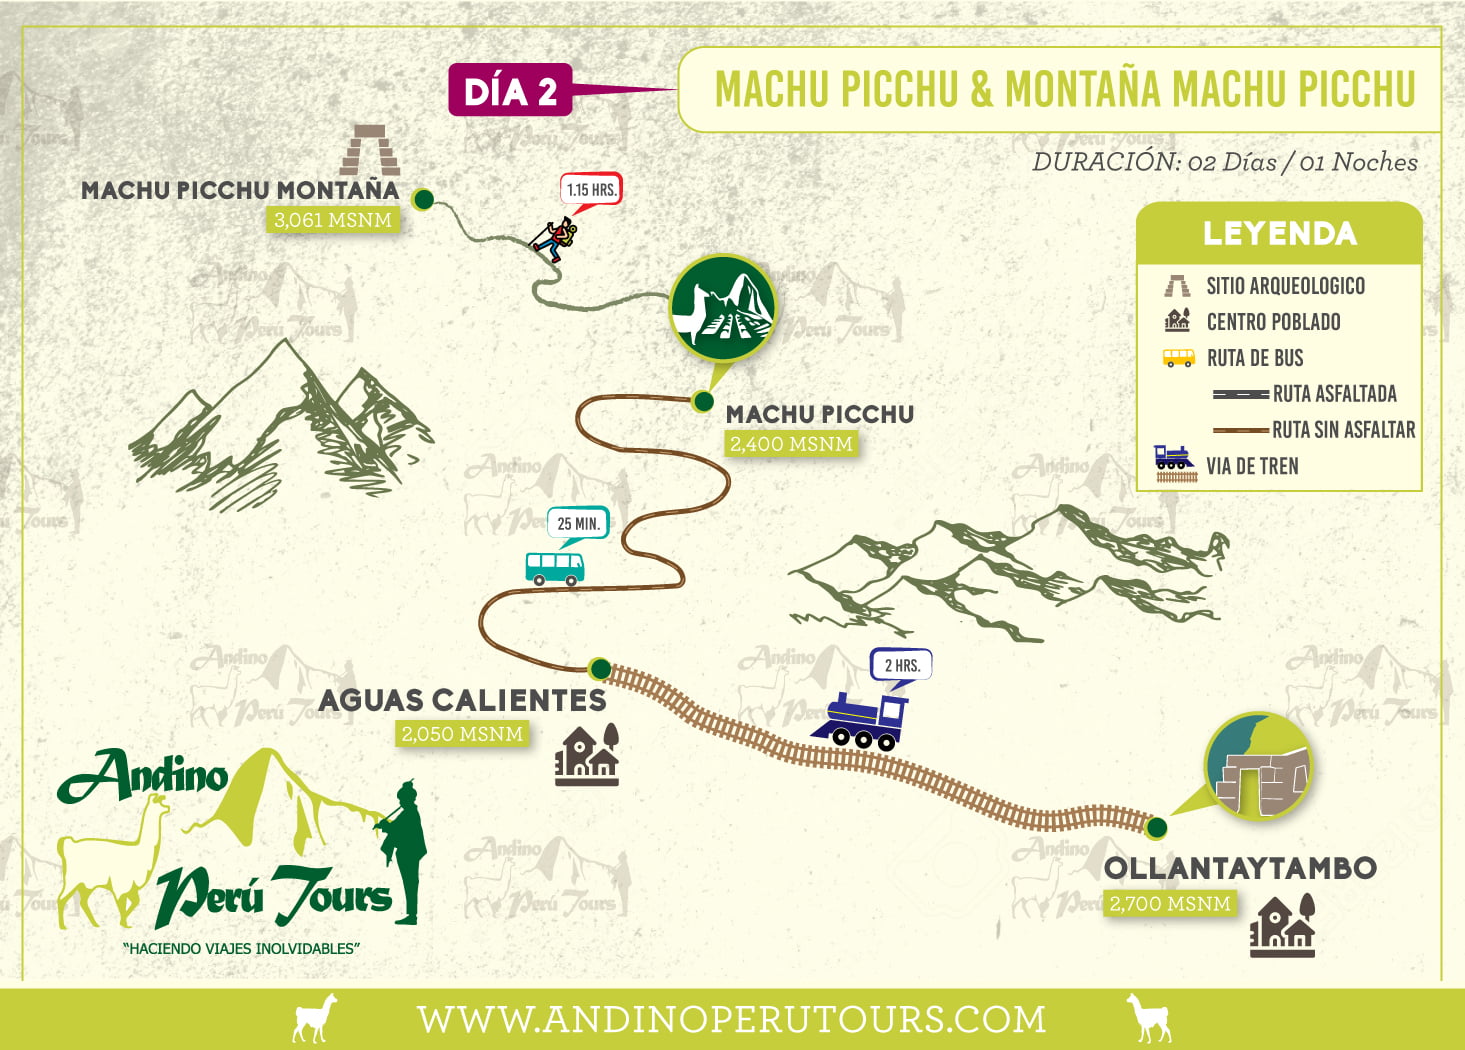 Machu Picchu Montaña 2d1n 2 1